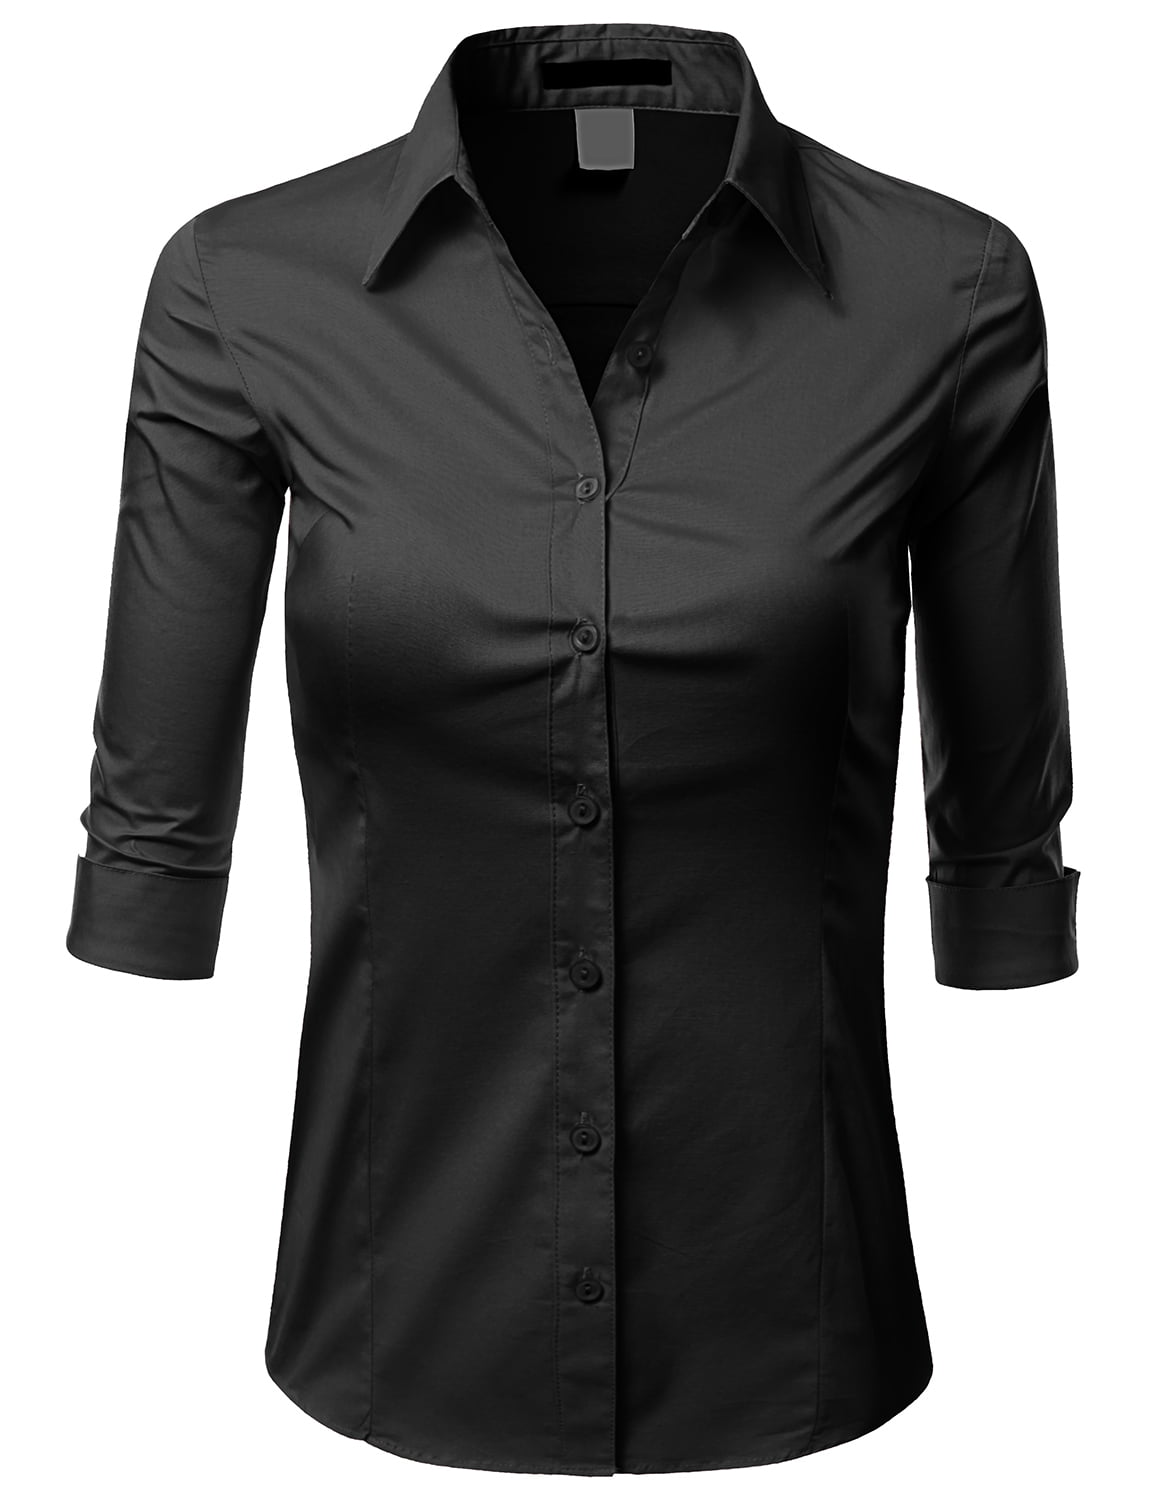 Womens 3/4 Sleeve Cotton Button Down Collared Shirt - Walmart.com